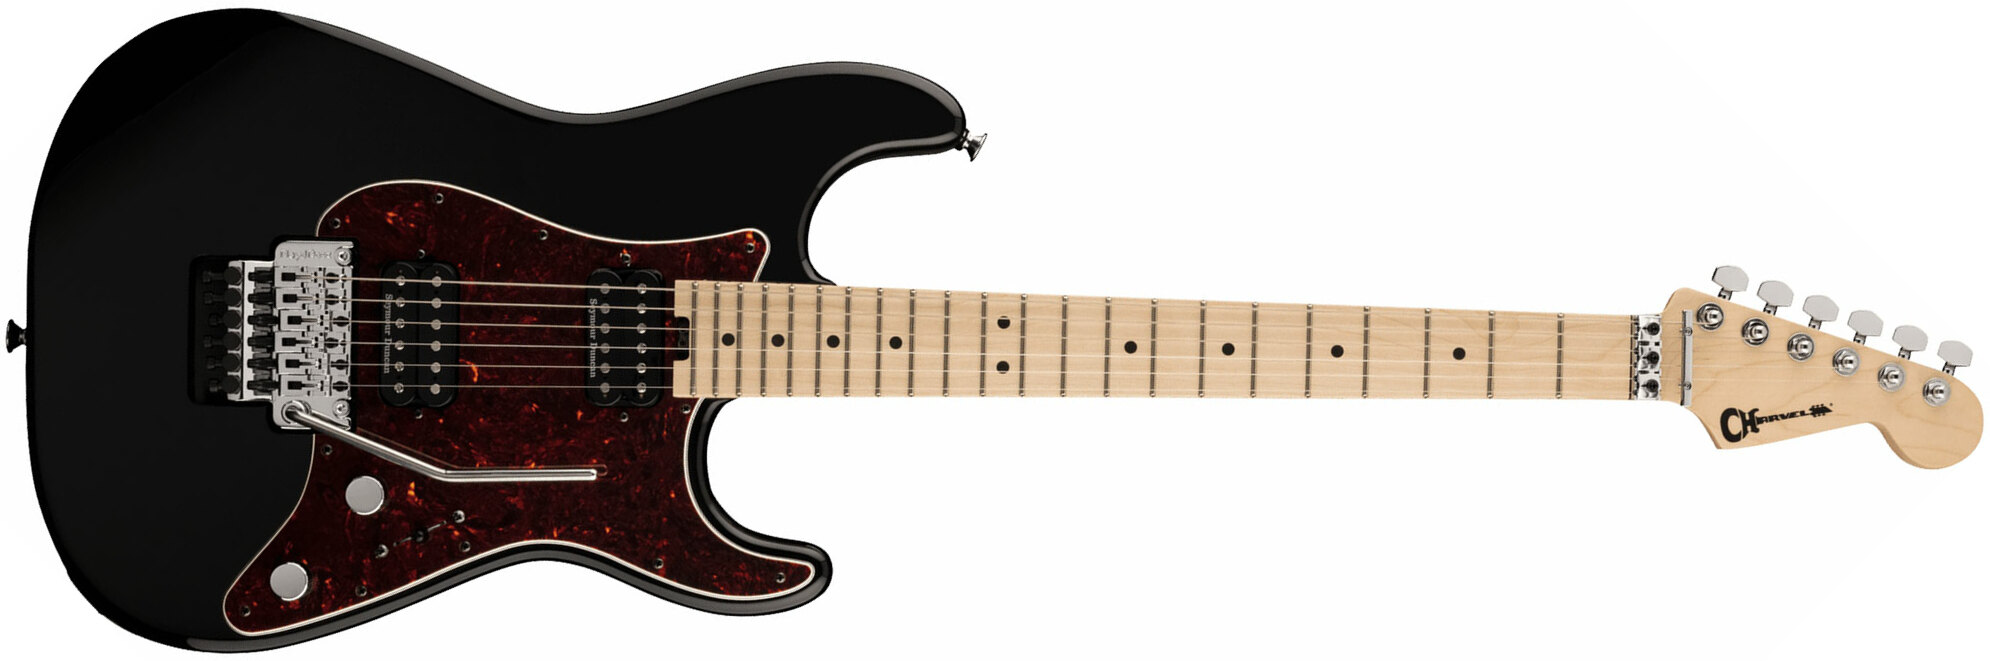 Charvel So-cal Style 1 Hh Fr M Pro-mod 2h Seymour Duncan Mn - Gamera Black - Guitarra eléctrica con forma de str. - Main picture